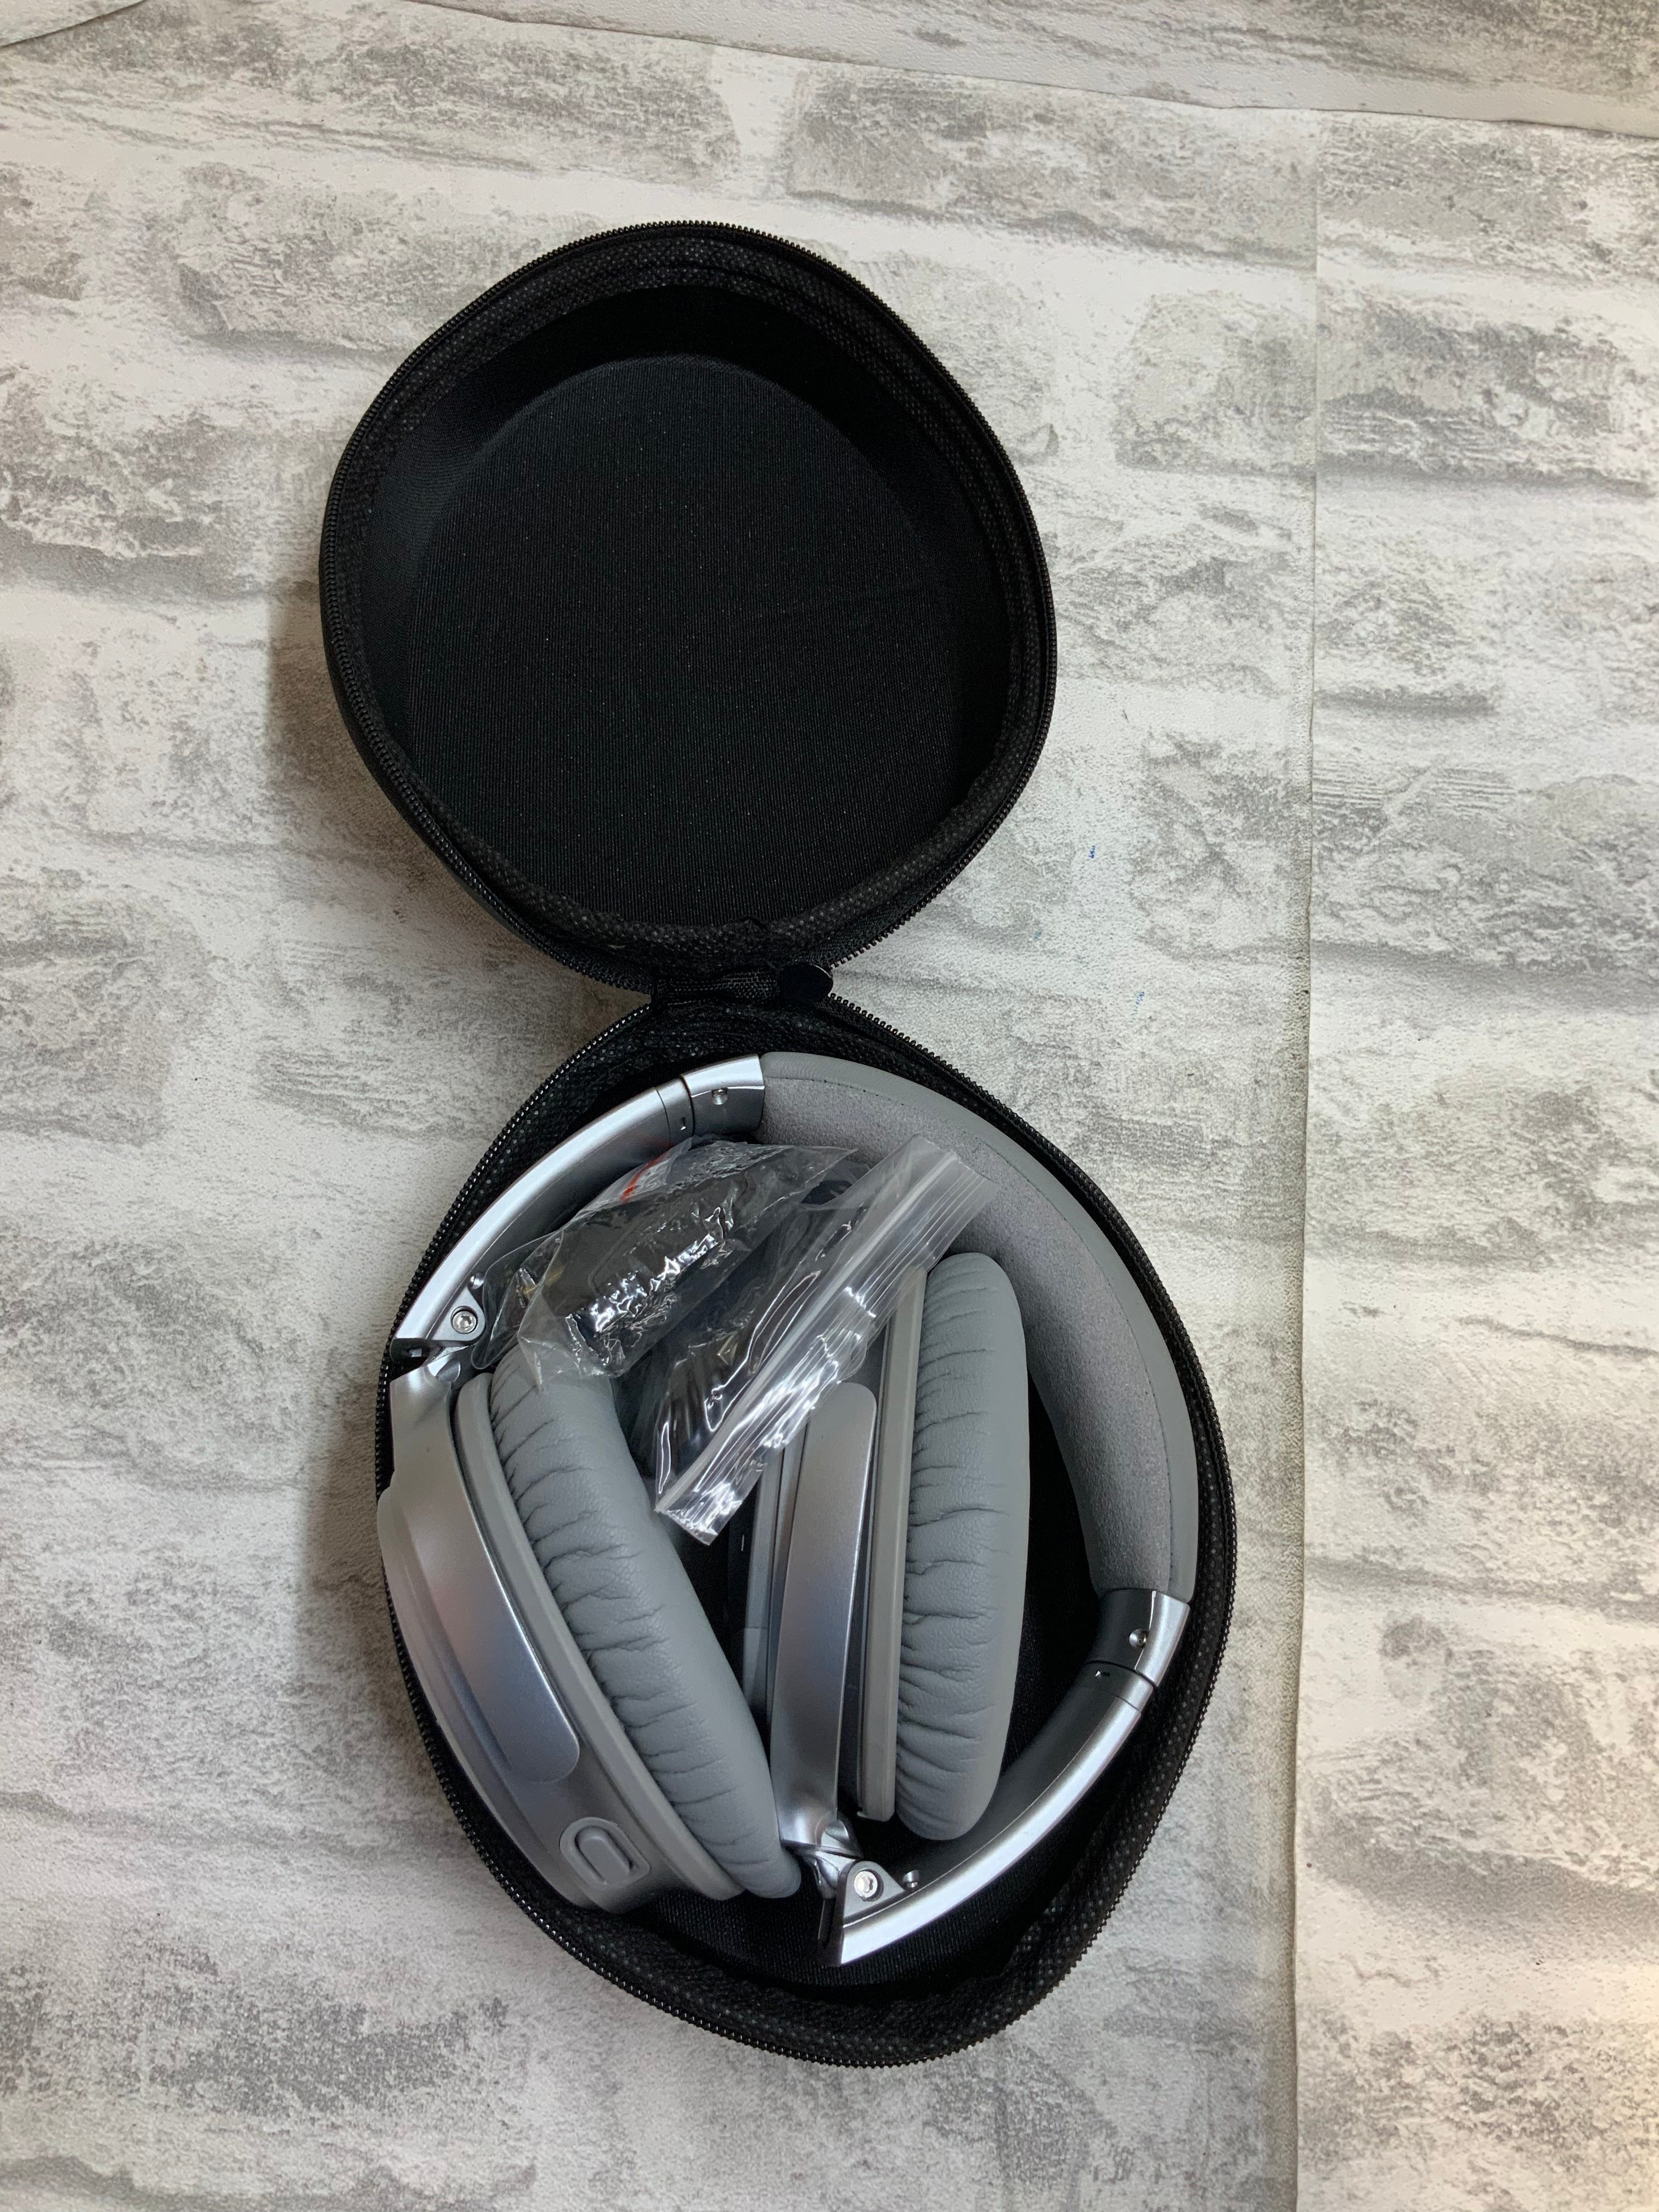 Bose QuietComfort 35 II Noise Cancelling Bluetooth Headphones (7585489453294)